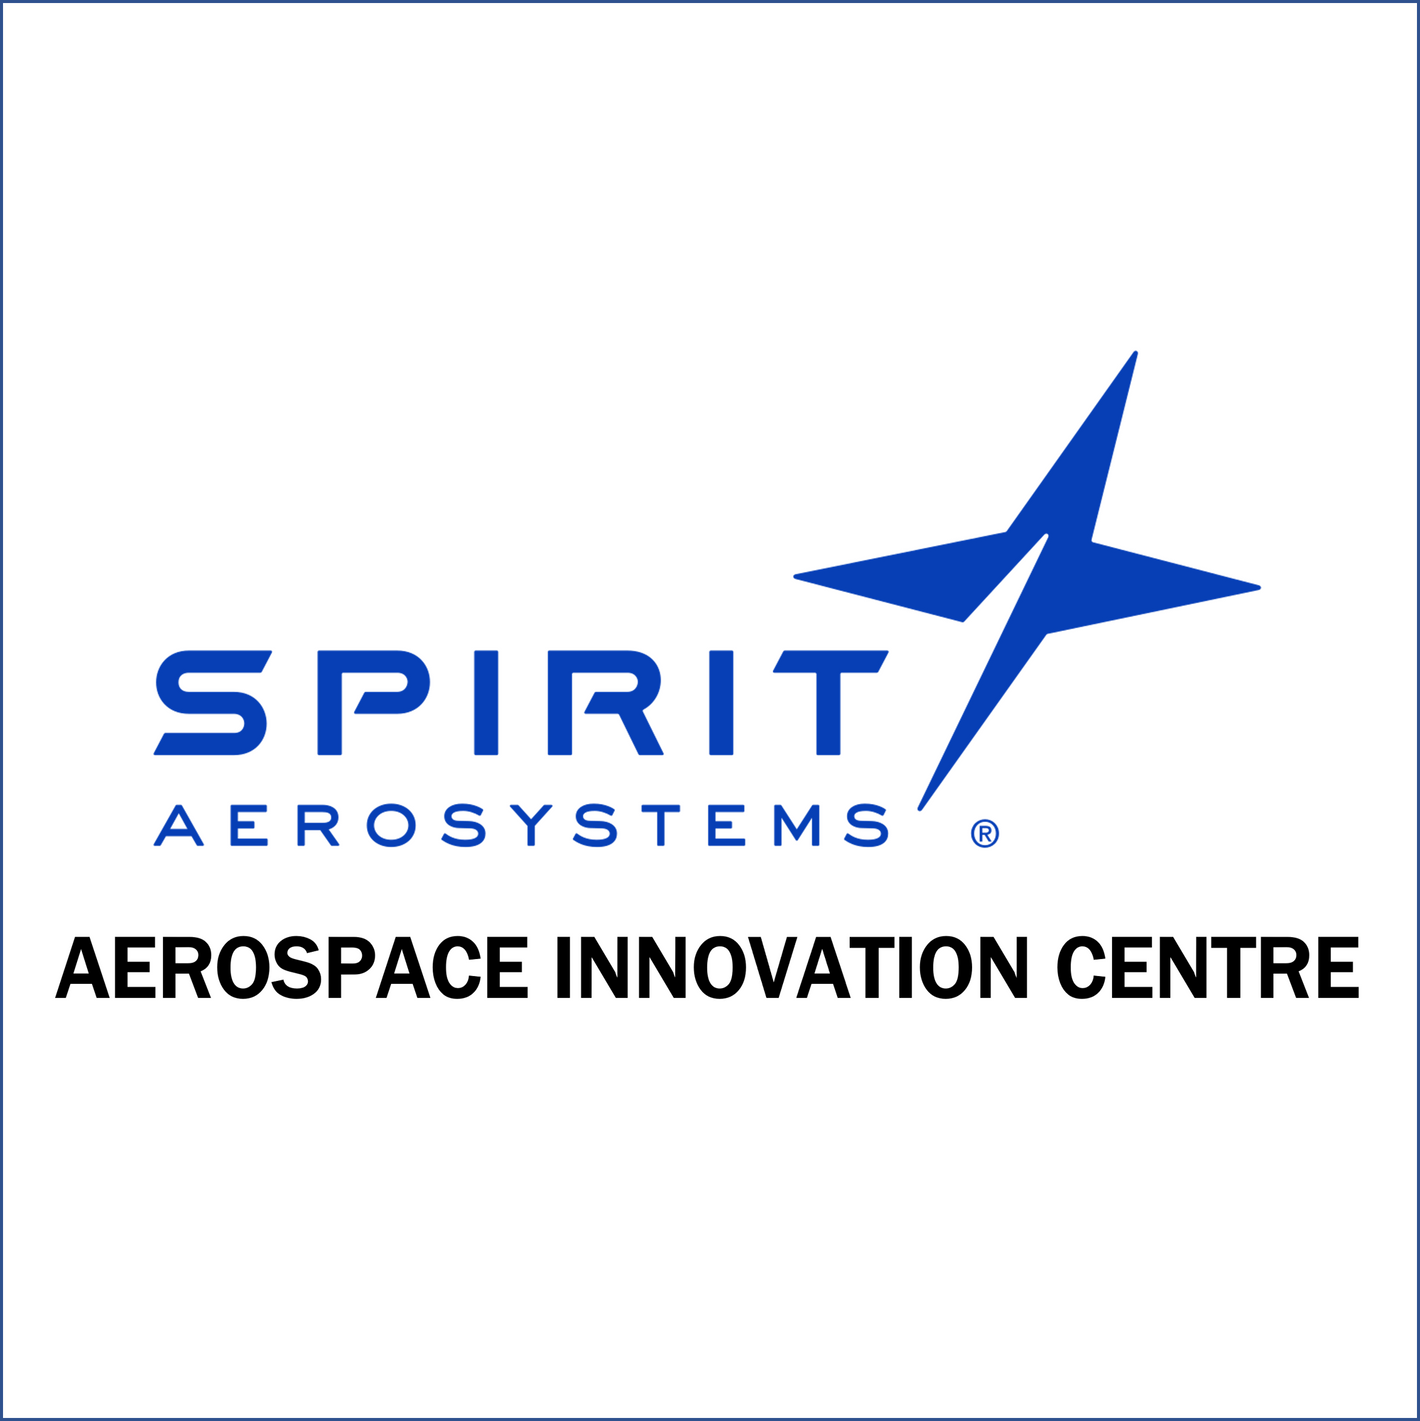 The Spirit Aerosystems logo with aerospace innovation centre written below it. CCP Gransden are active members of the Spirit Aerosystems Aerospace Innovation Centre